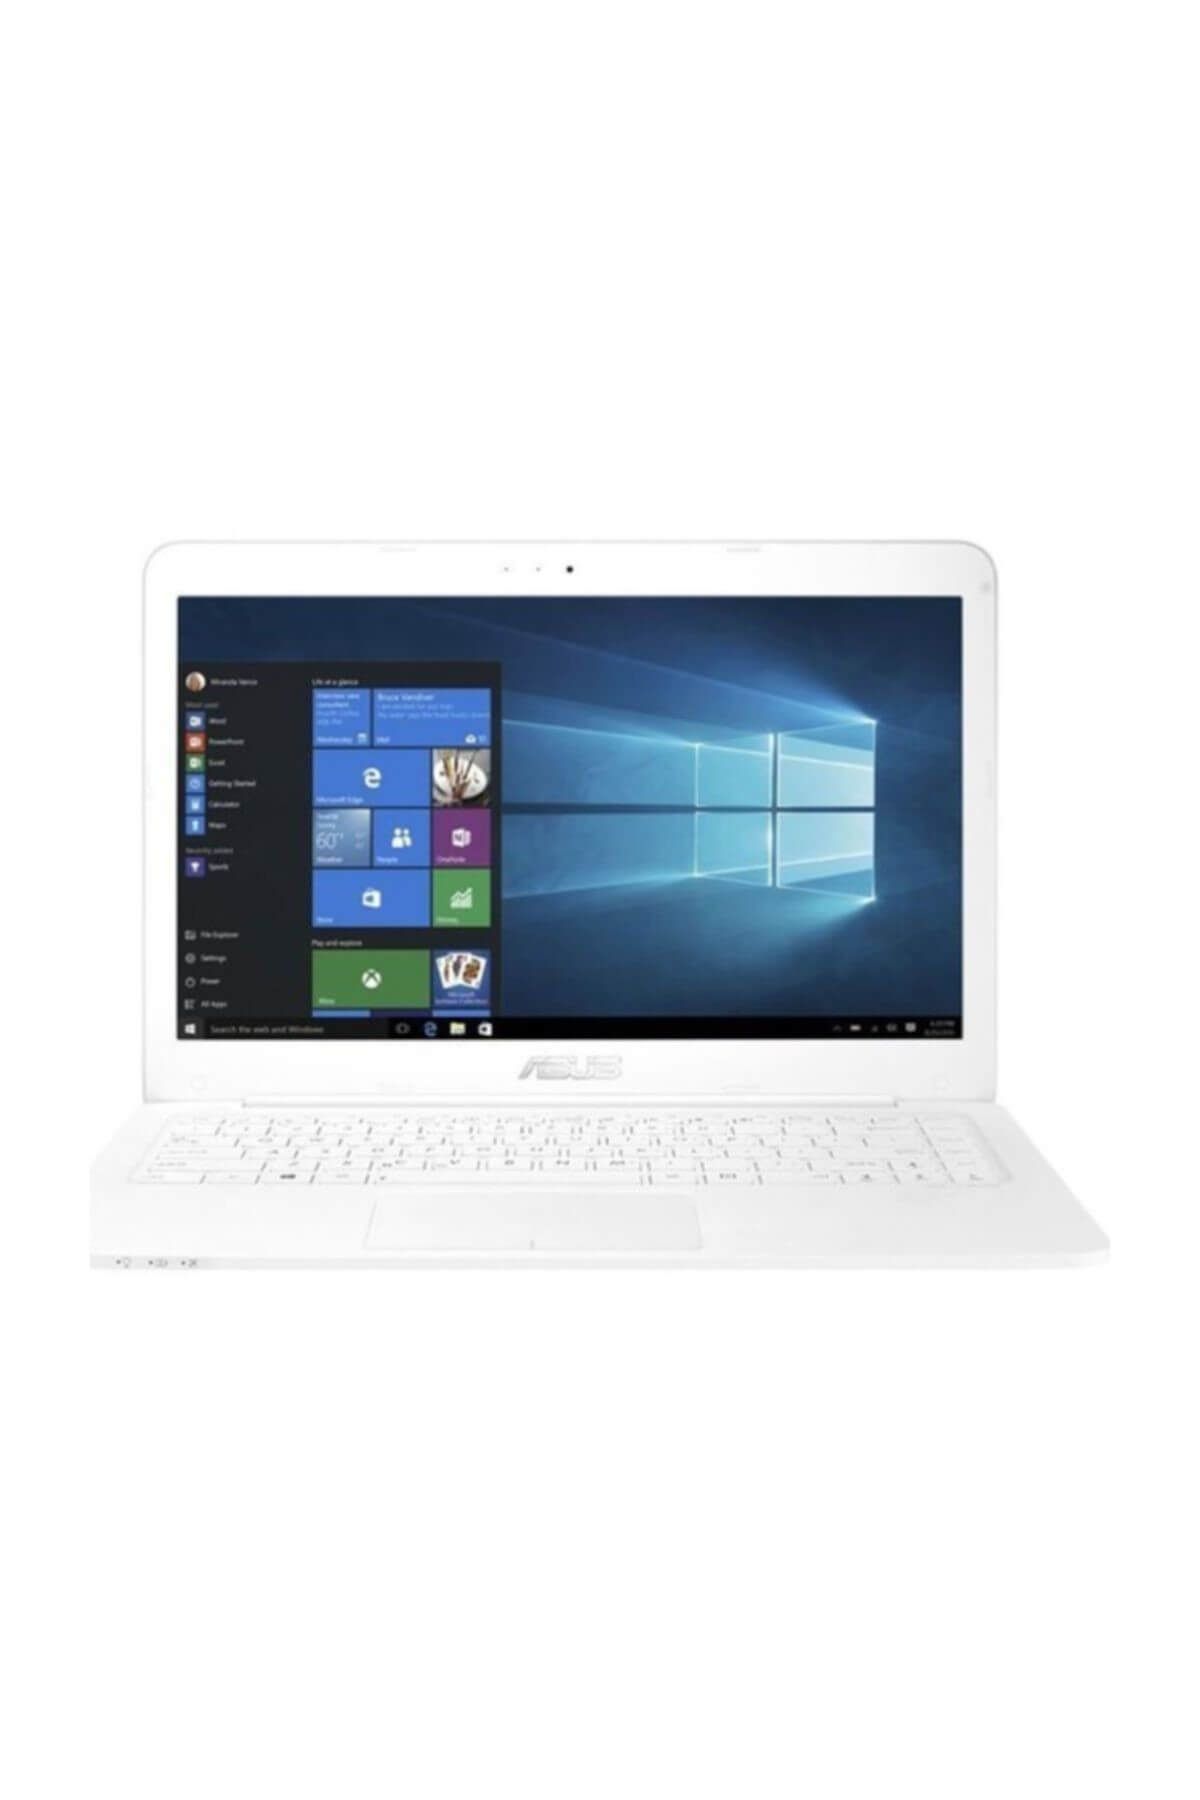 ASUS VivoBook E402NA-GA064T Intel Celeron N3350 1.10GHz 4GB 500GB 14" Windows10 Home Notebook